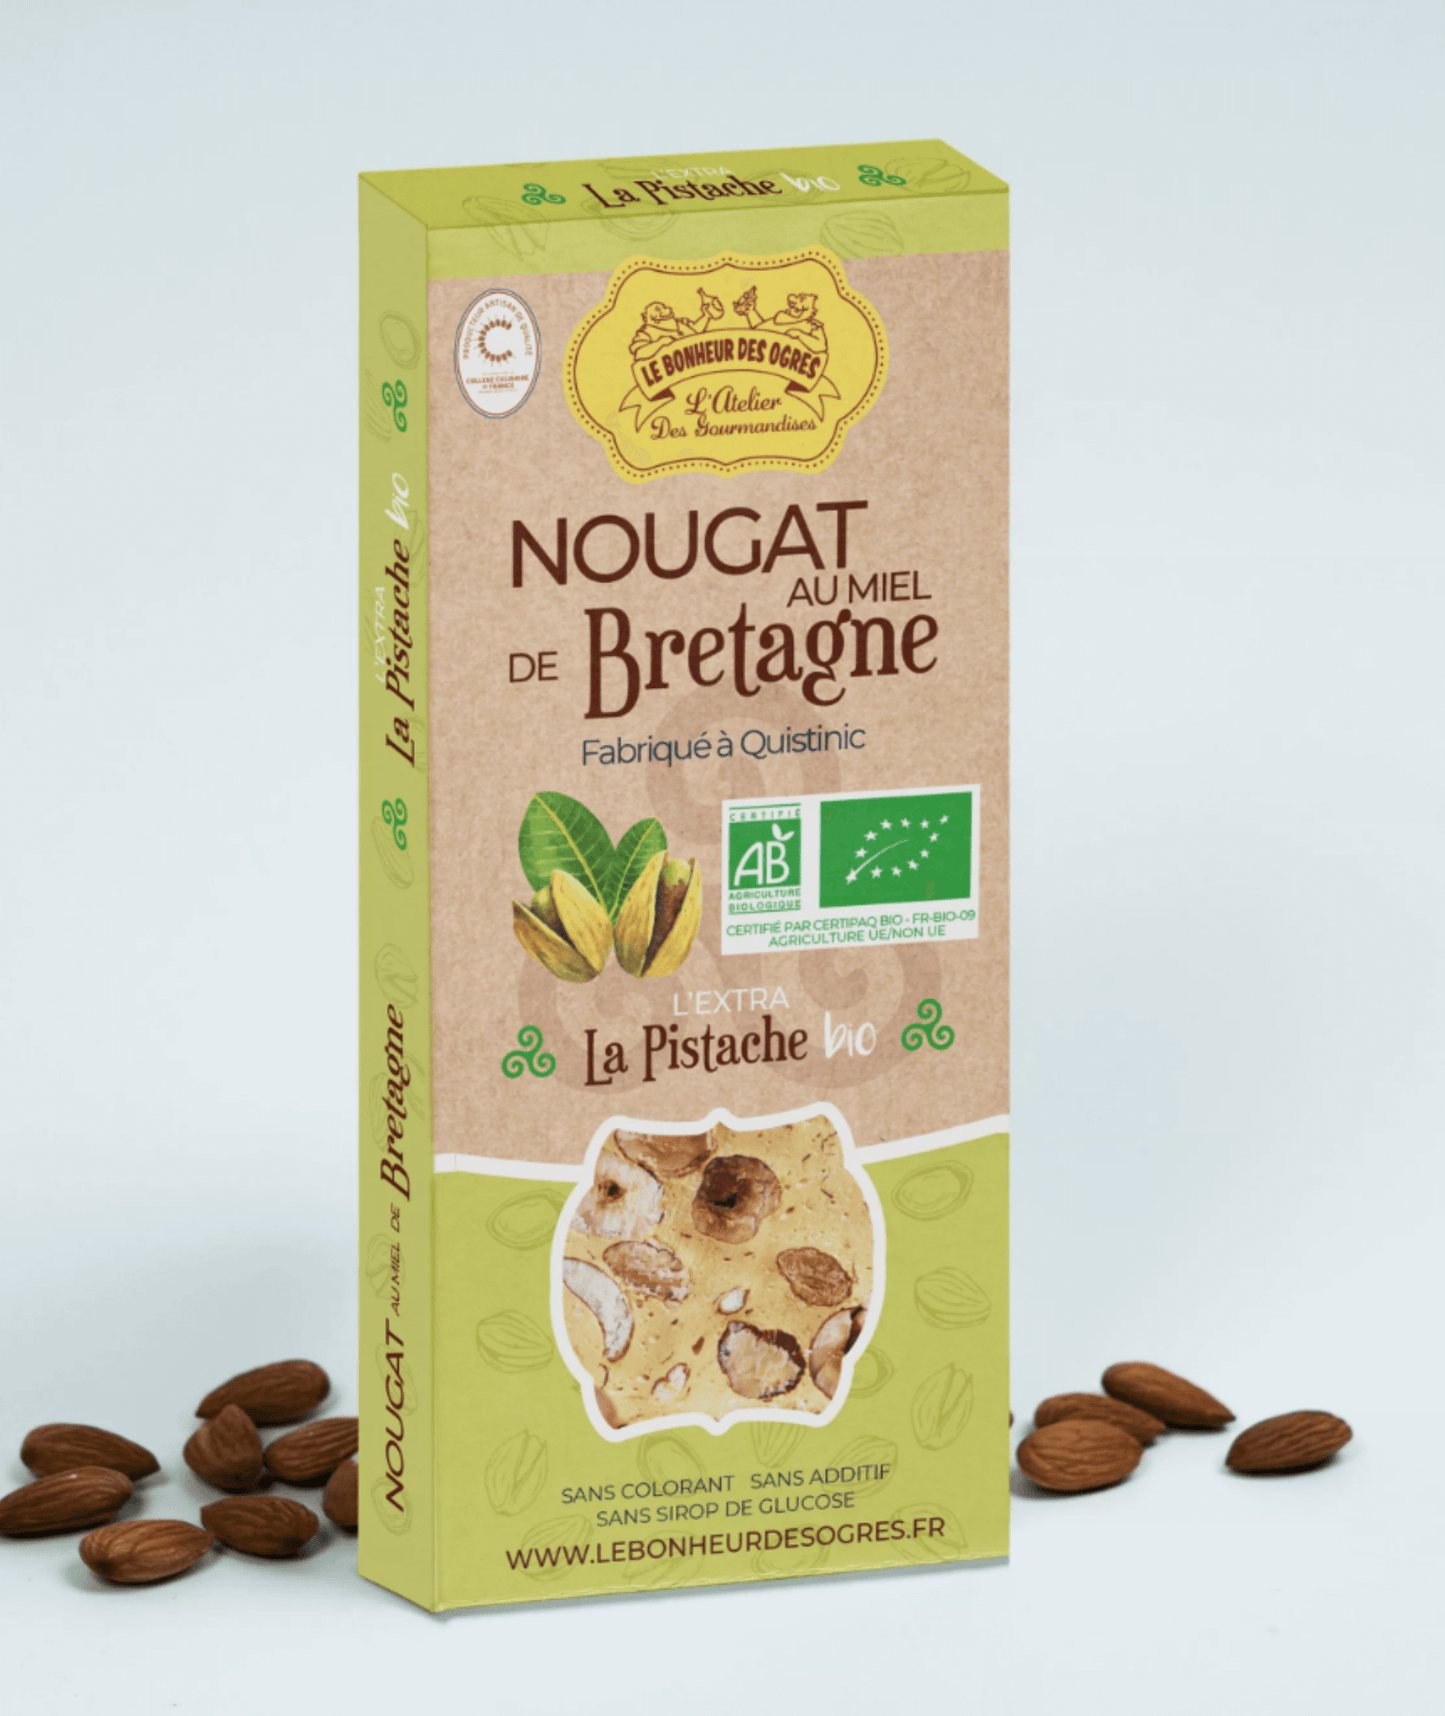 Økologisk Fransk nougat med pistache